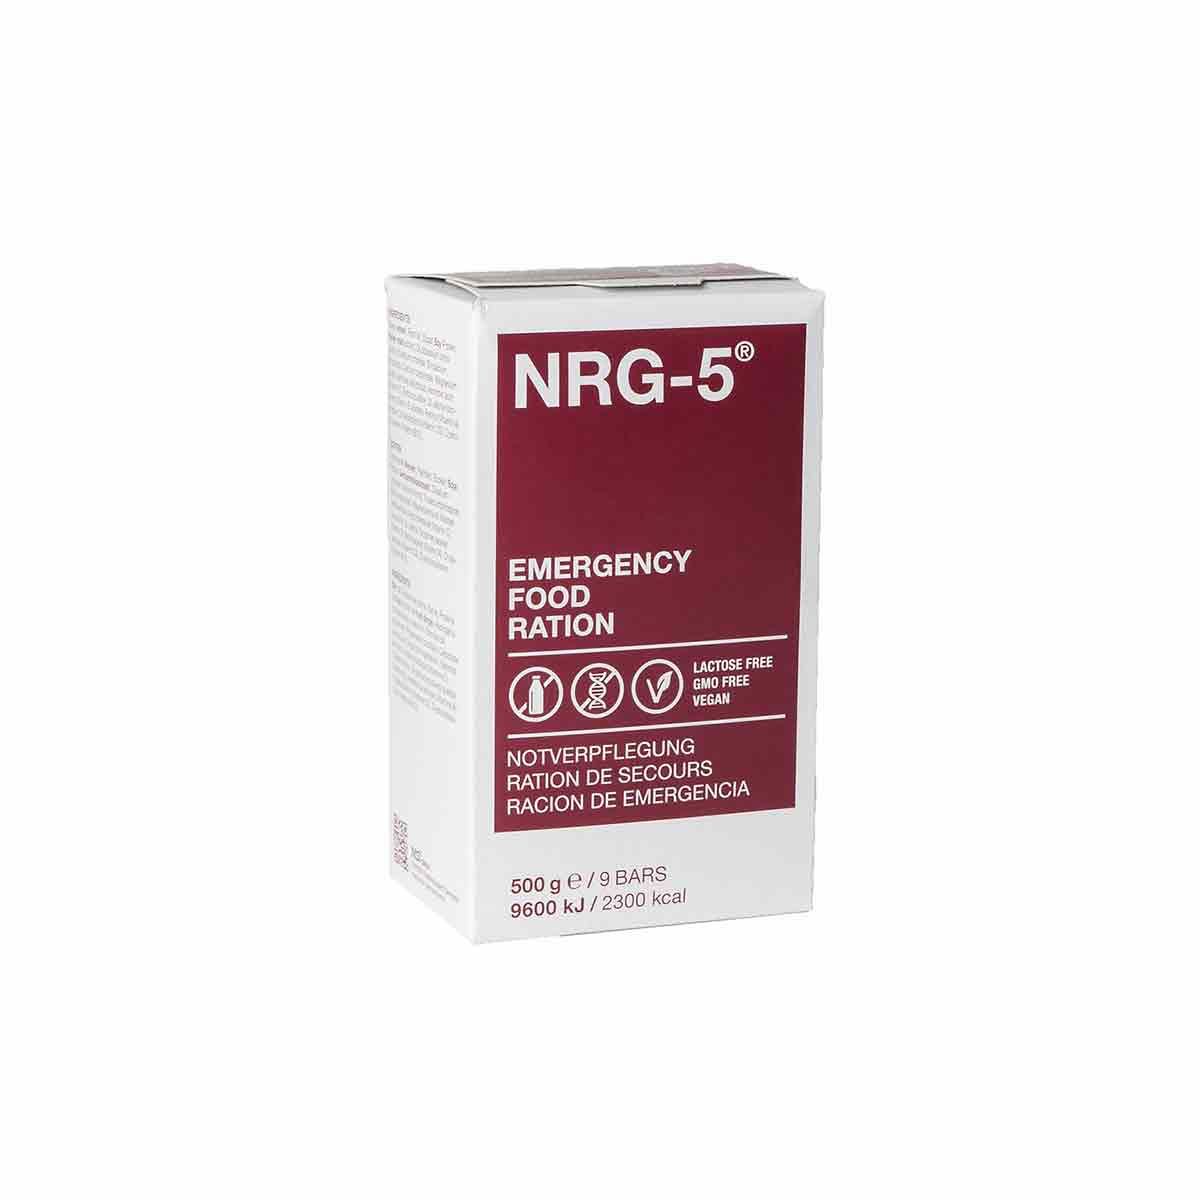 Emergency ration NRG-5 - 20 years